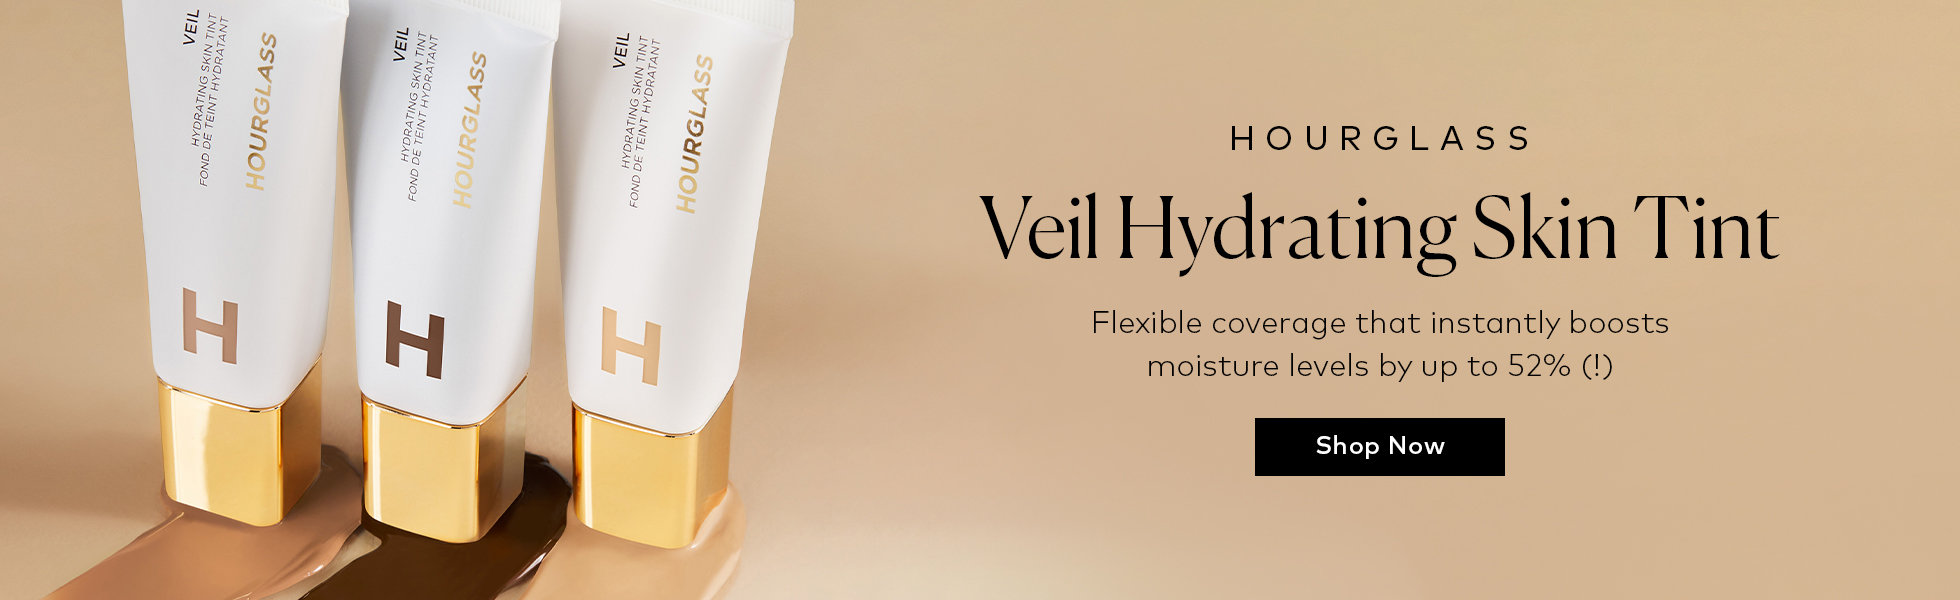 Shop the Hourglass Veil Hydrating Skin Tints at Beautylish.com